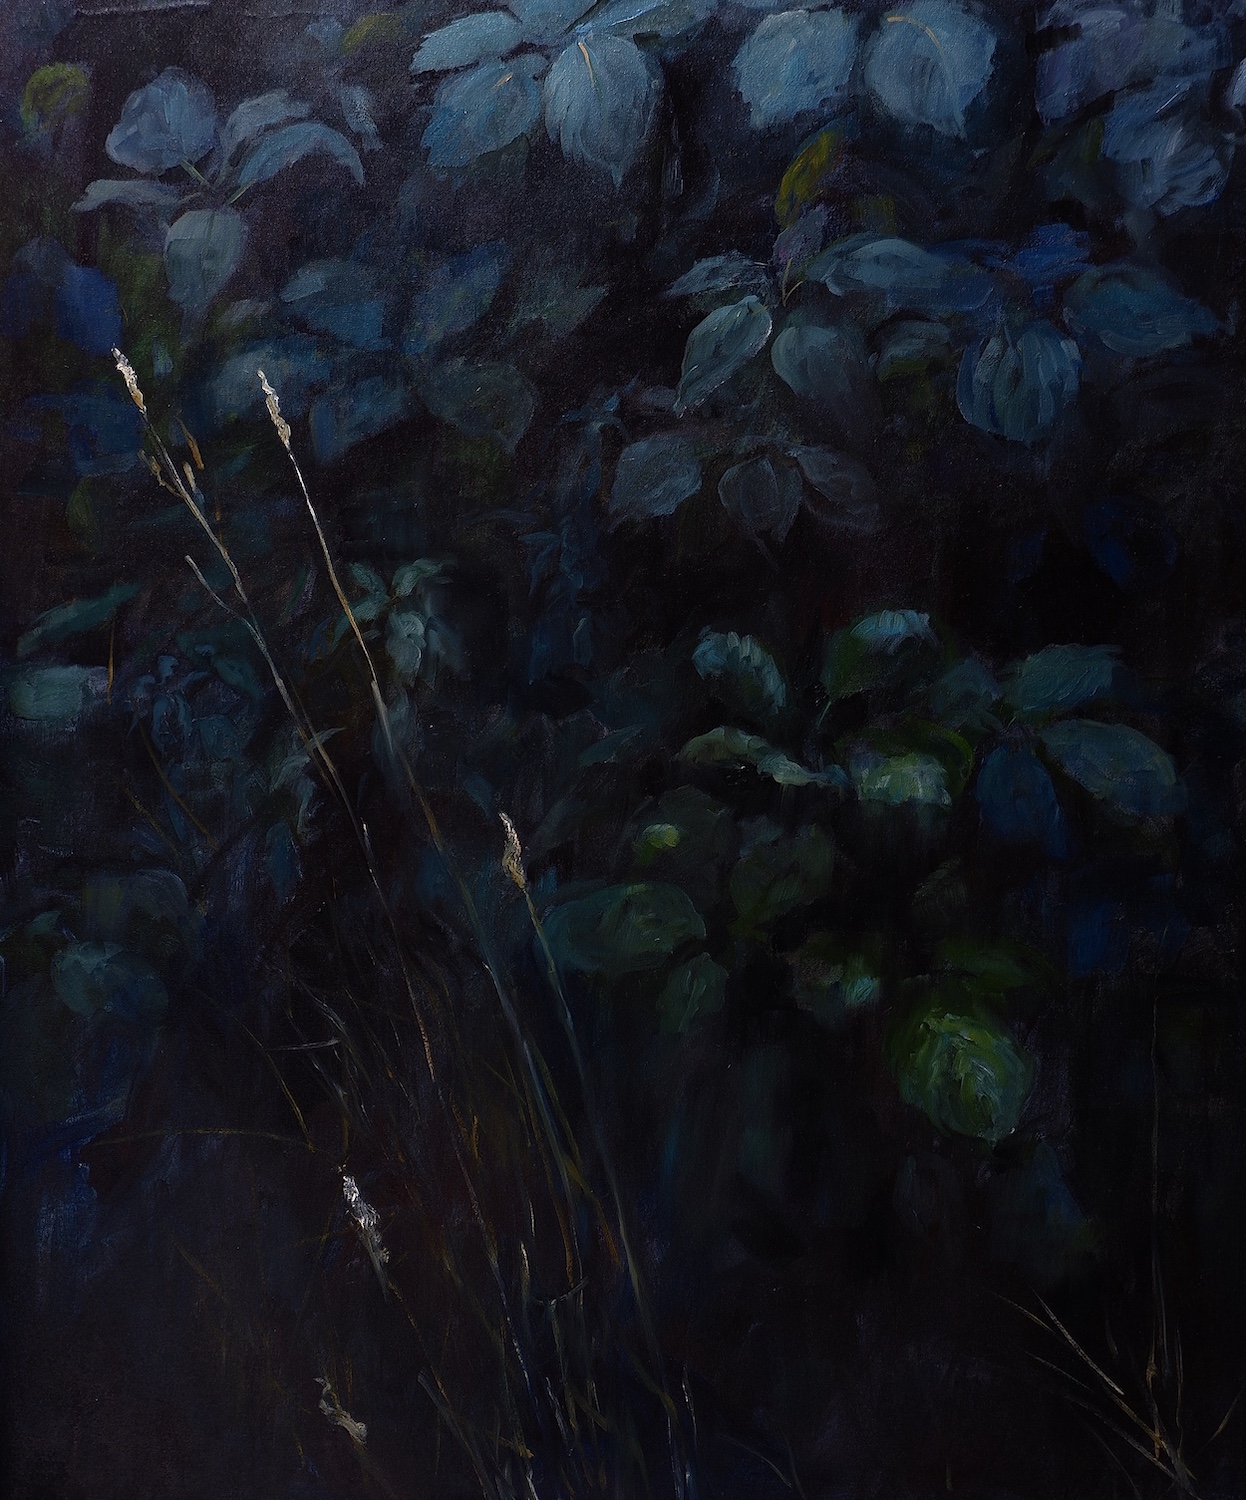 'In Blue Shade', Helen Tarr, Oil on canvas, 102 x 84 cm